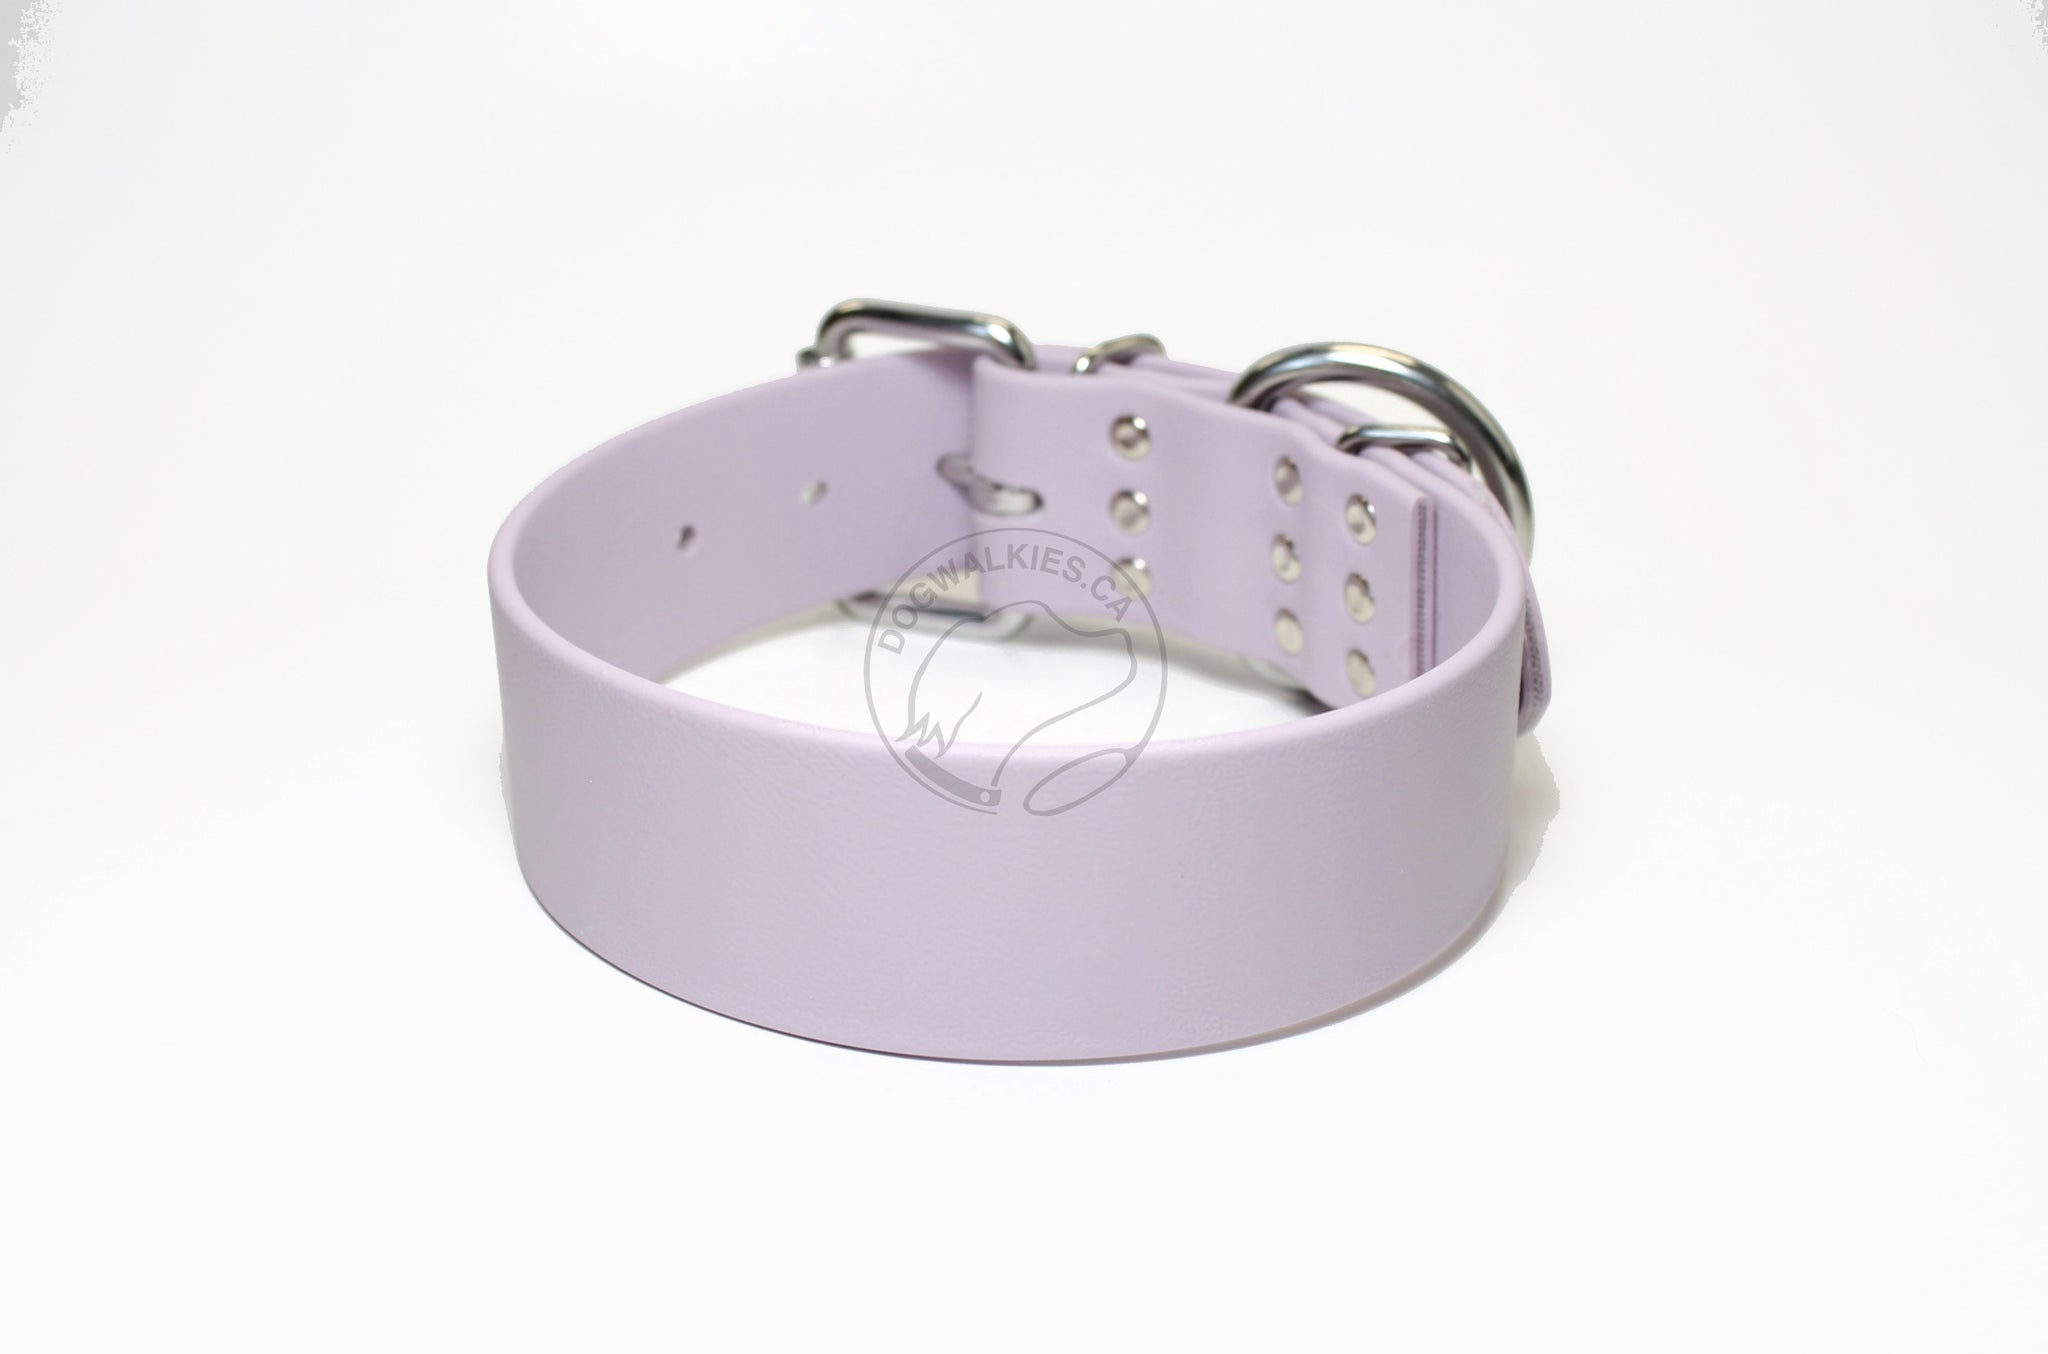 Lavender Purple Pastel Biothane Dog Collar - Extra Wide - 1.5 inch (38mm) wide